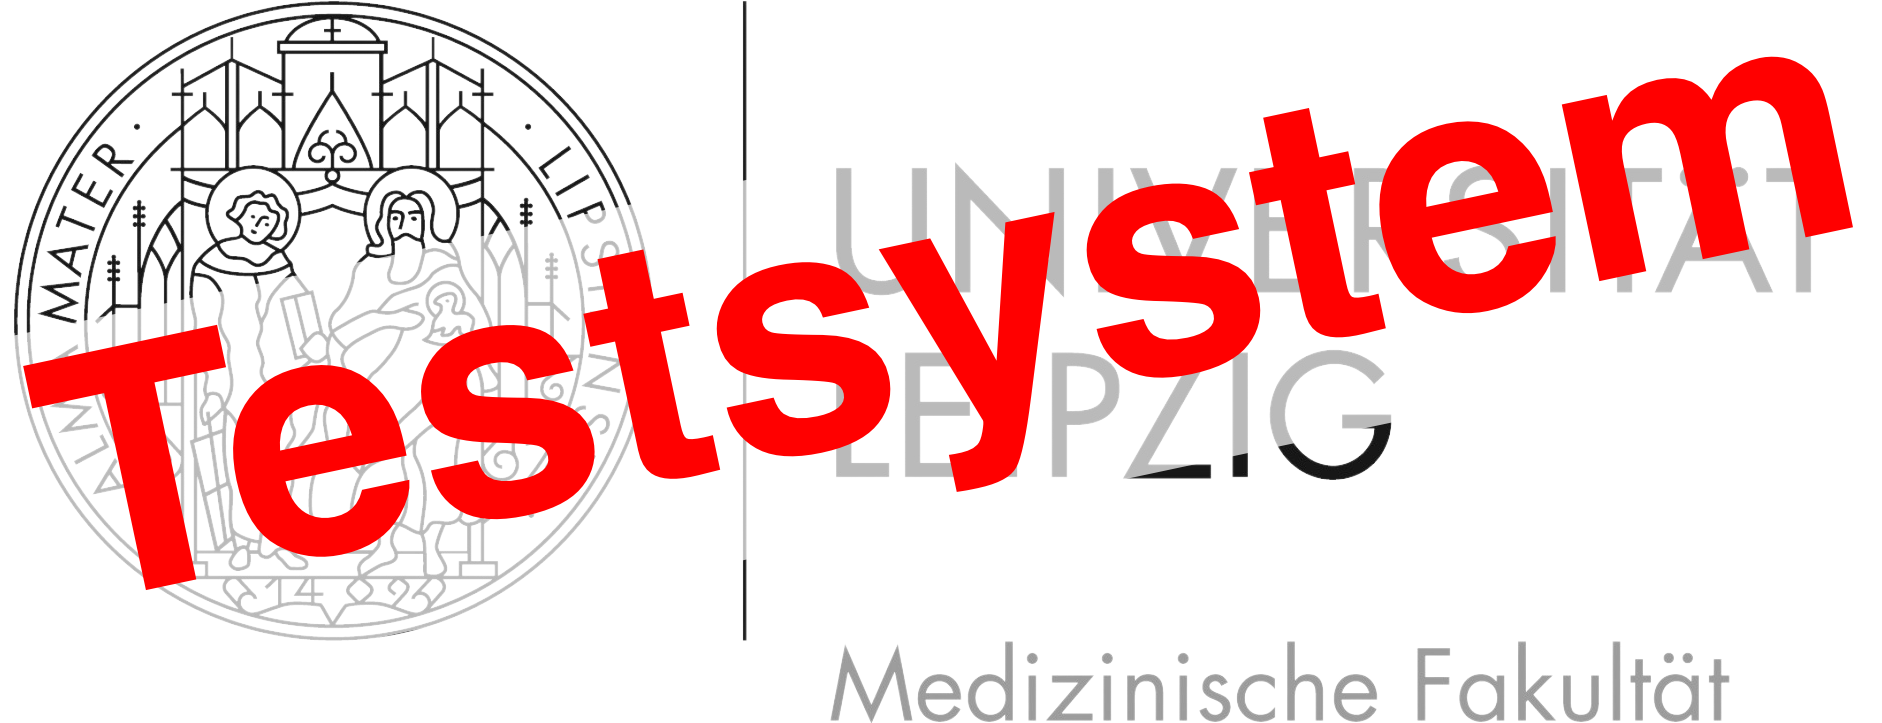 Medizinische Fakultät Leipzig Logo